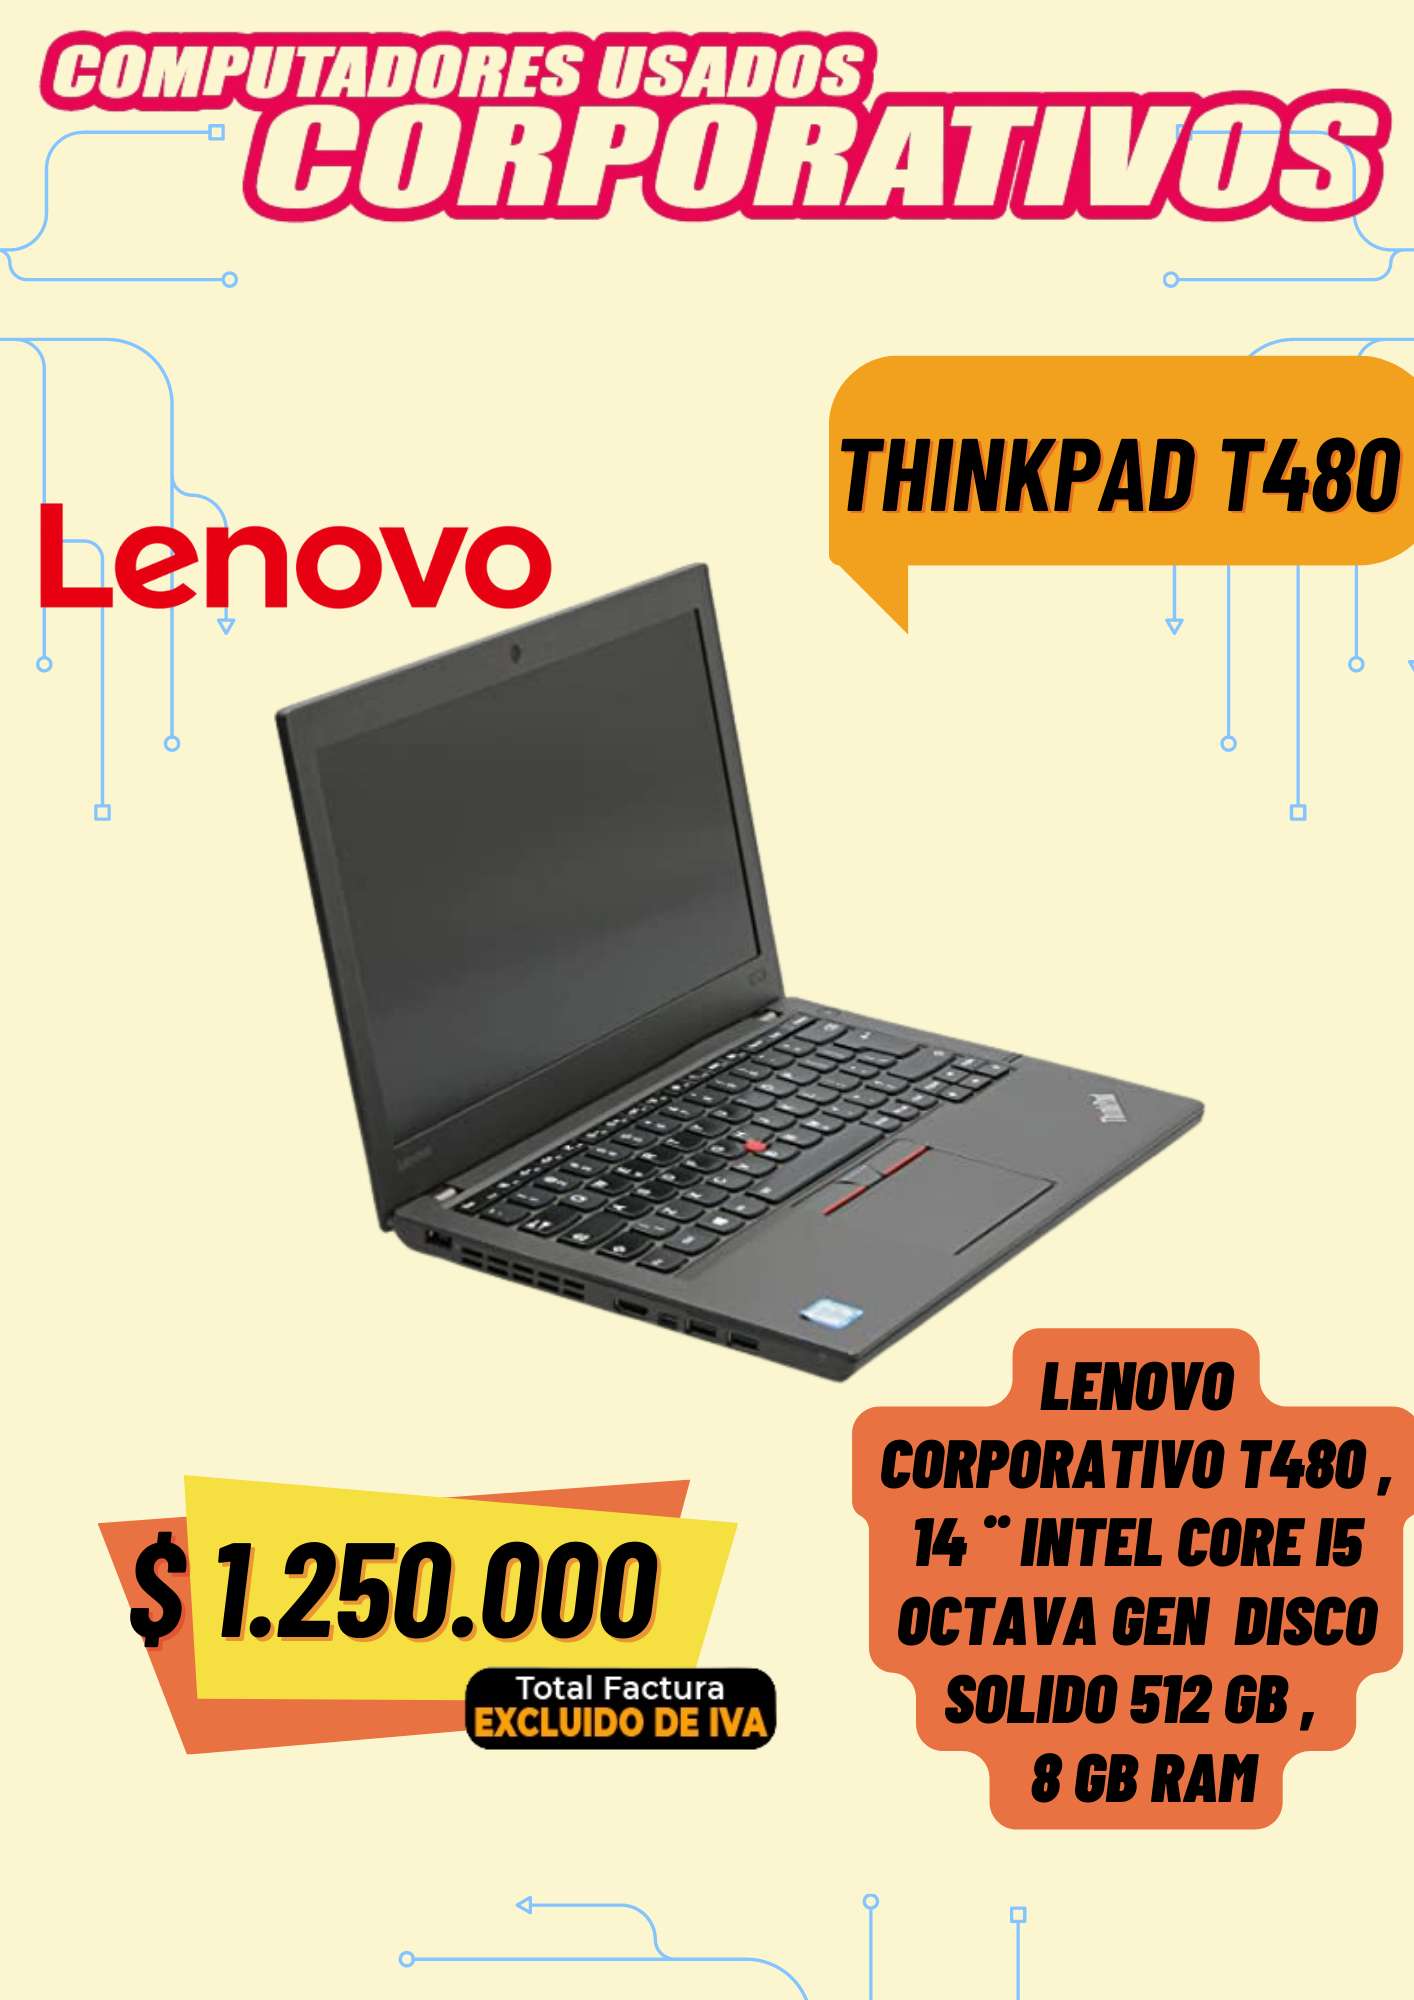 Lenovo Tinkpad T480 octava generación